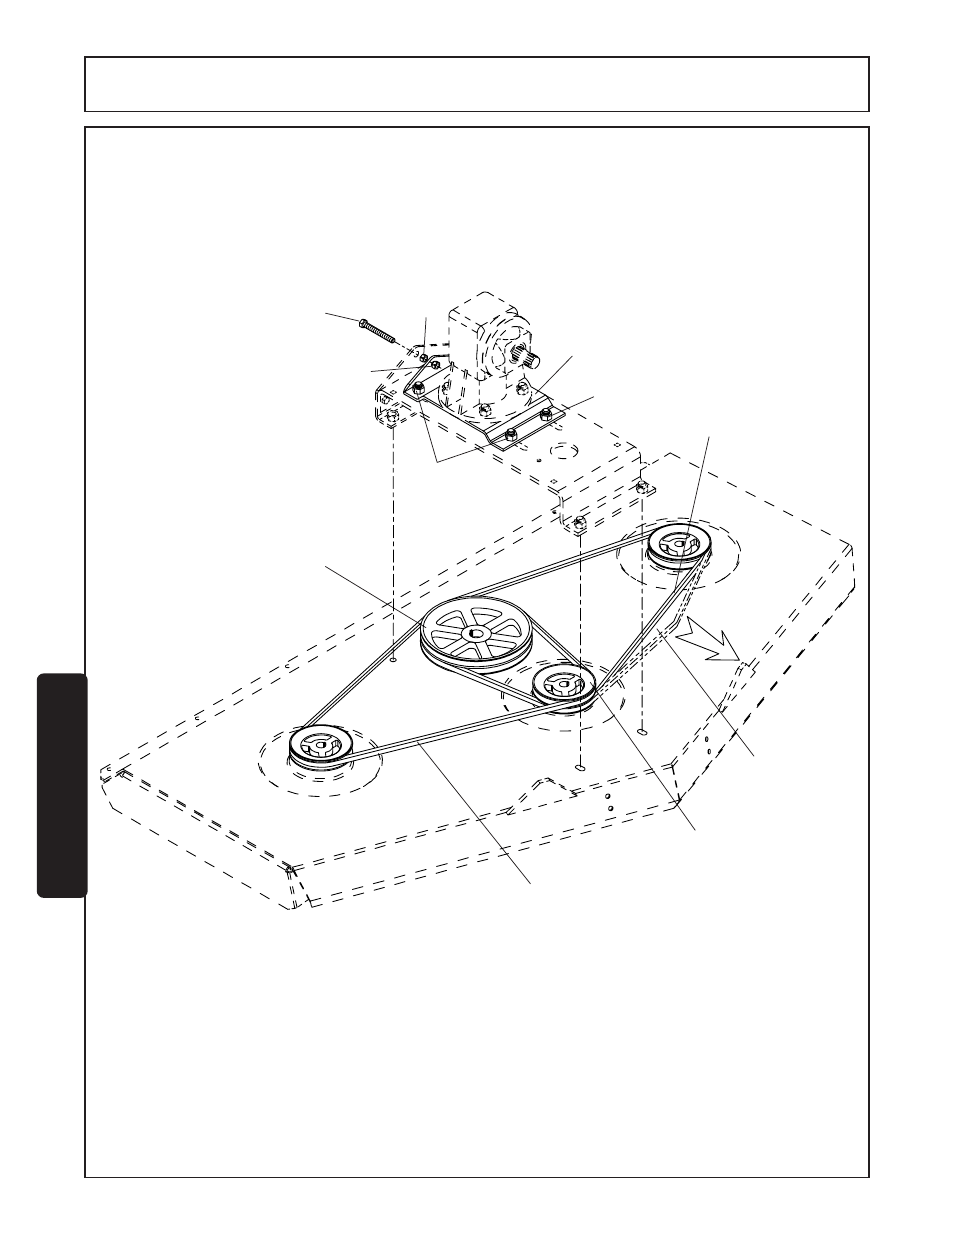 Maintenance | Servis-Rhino FM84 User Manual | Page 88 / 100